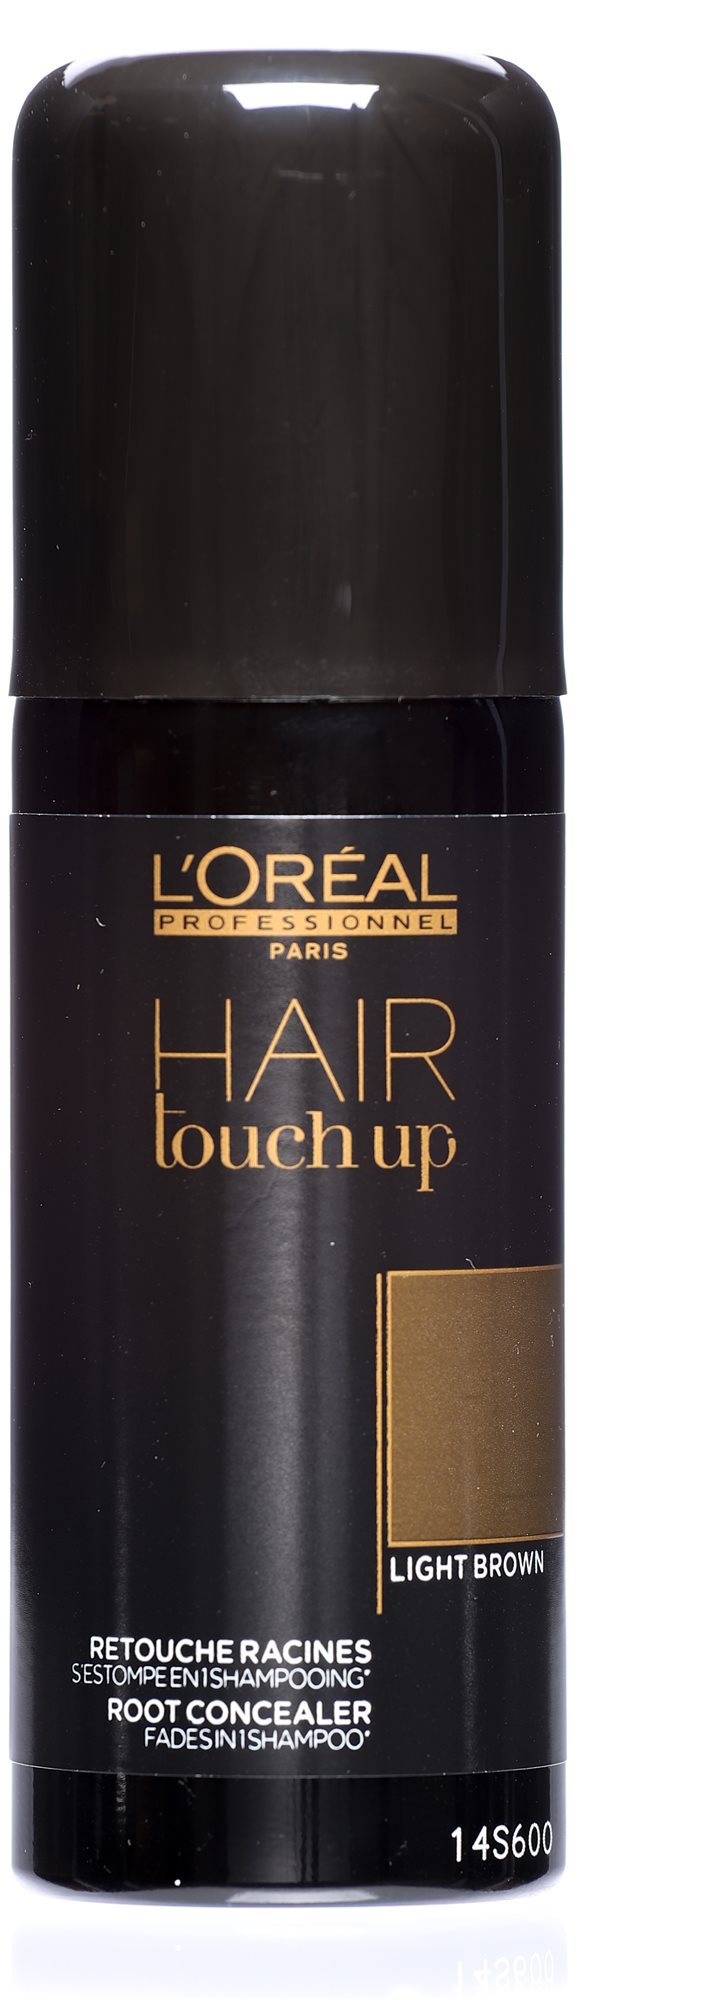 LĽORÉAL Professionnel HAIR Touch Up Színező hajspray, világosbarna, 75ml